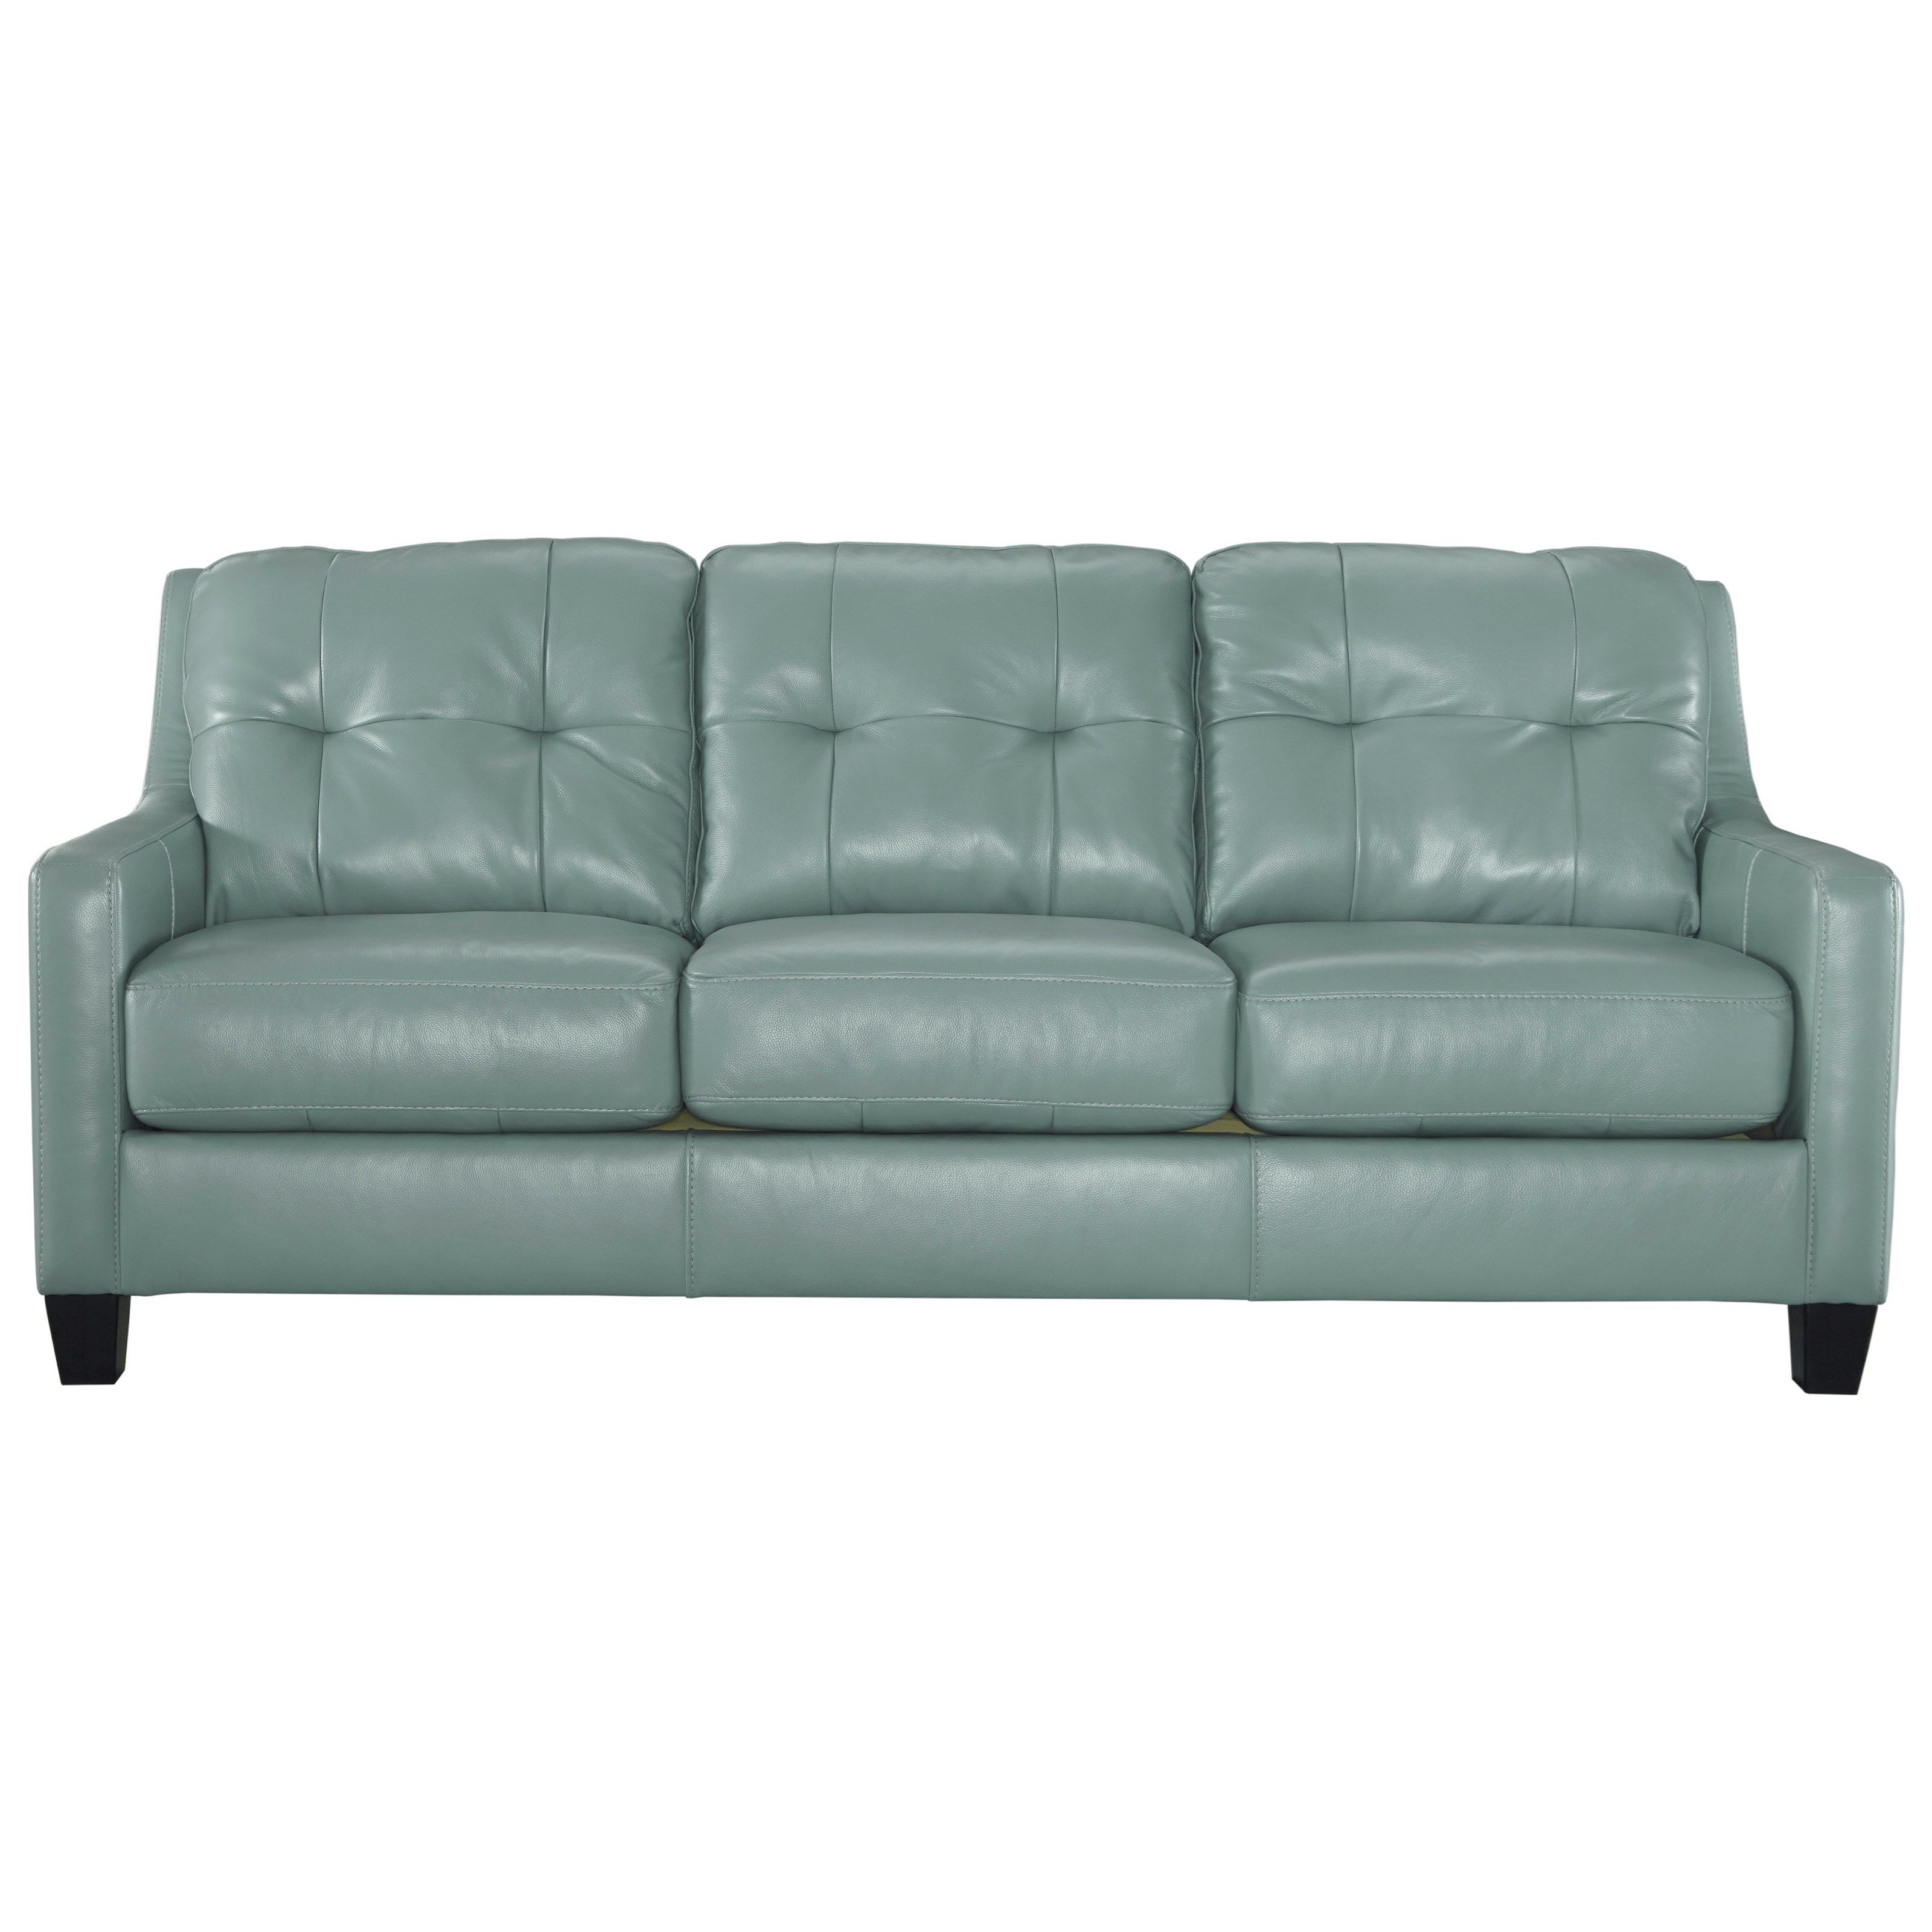 Signature Designashley O'kean Contemporary Leather Match Sofa In Ashley Tufted Sofas (View 2 of 10)